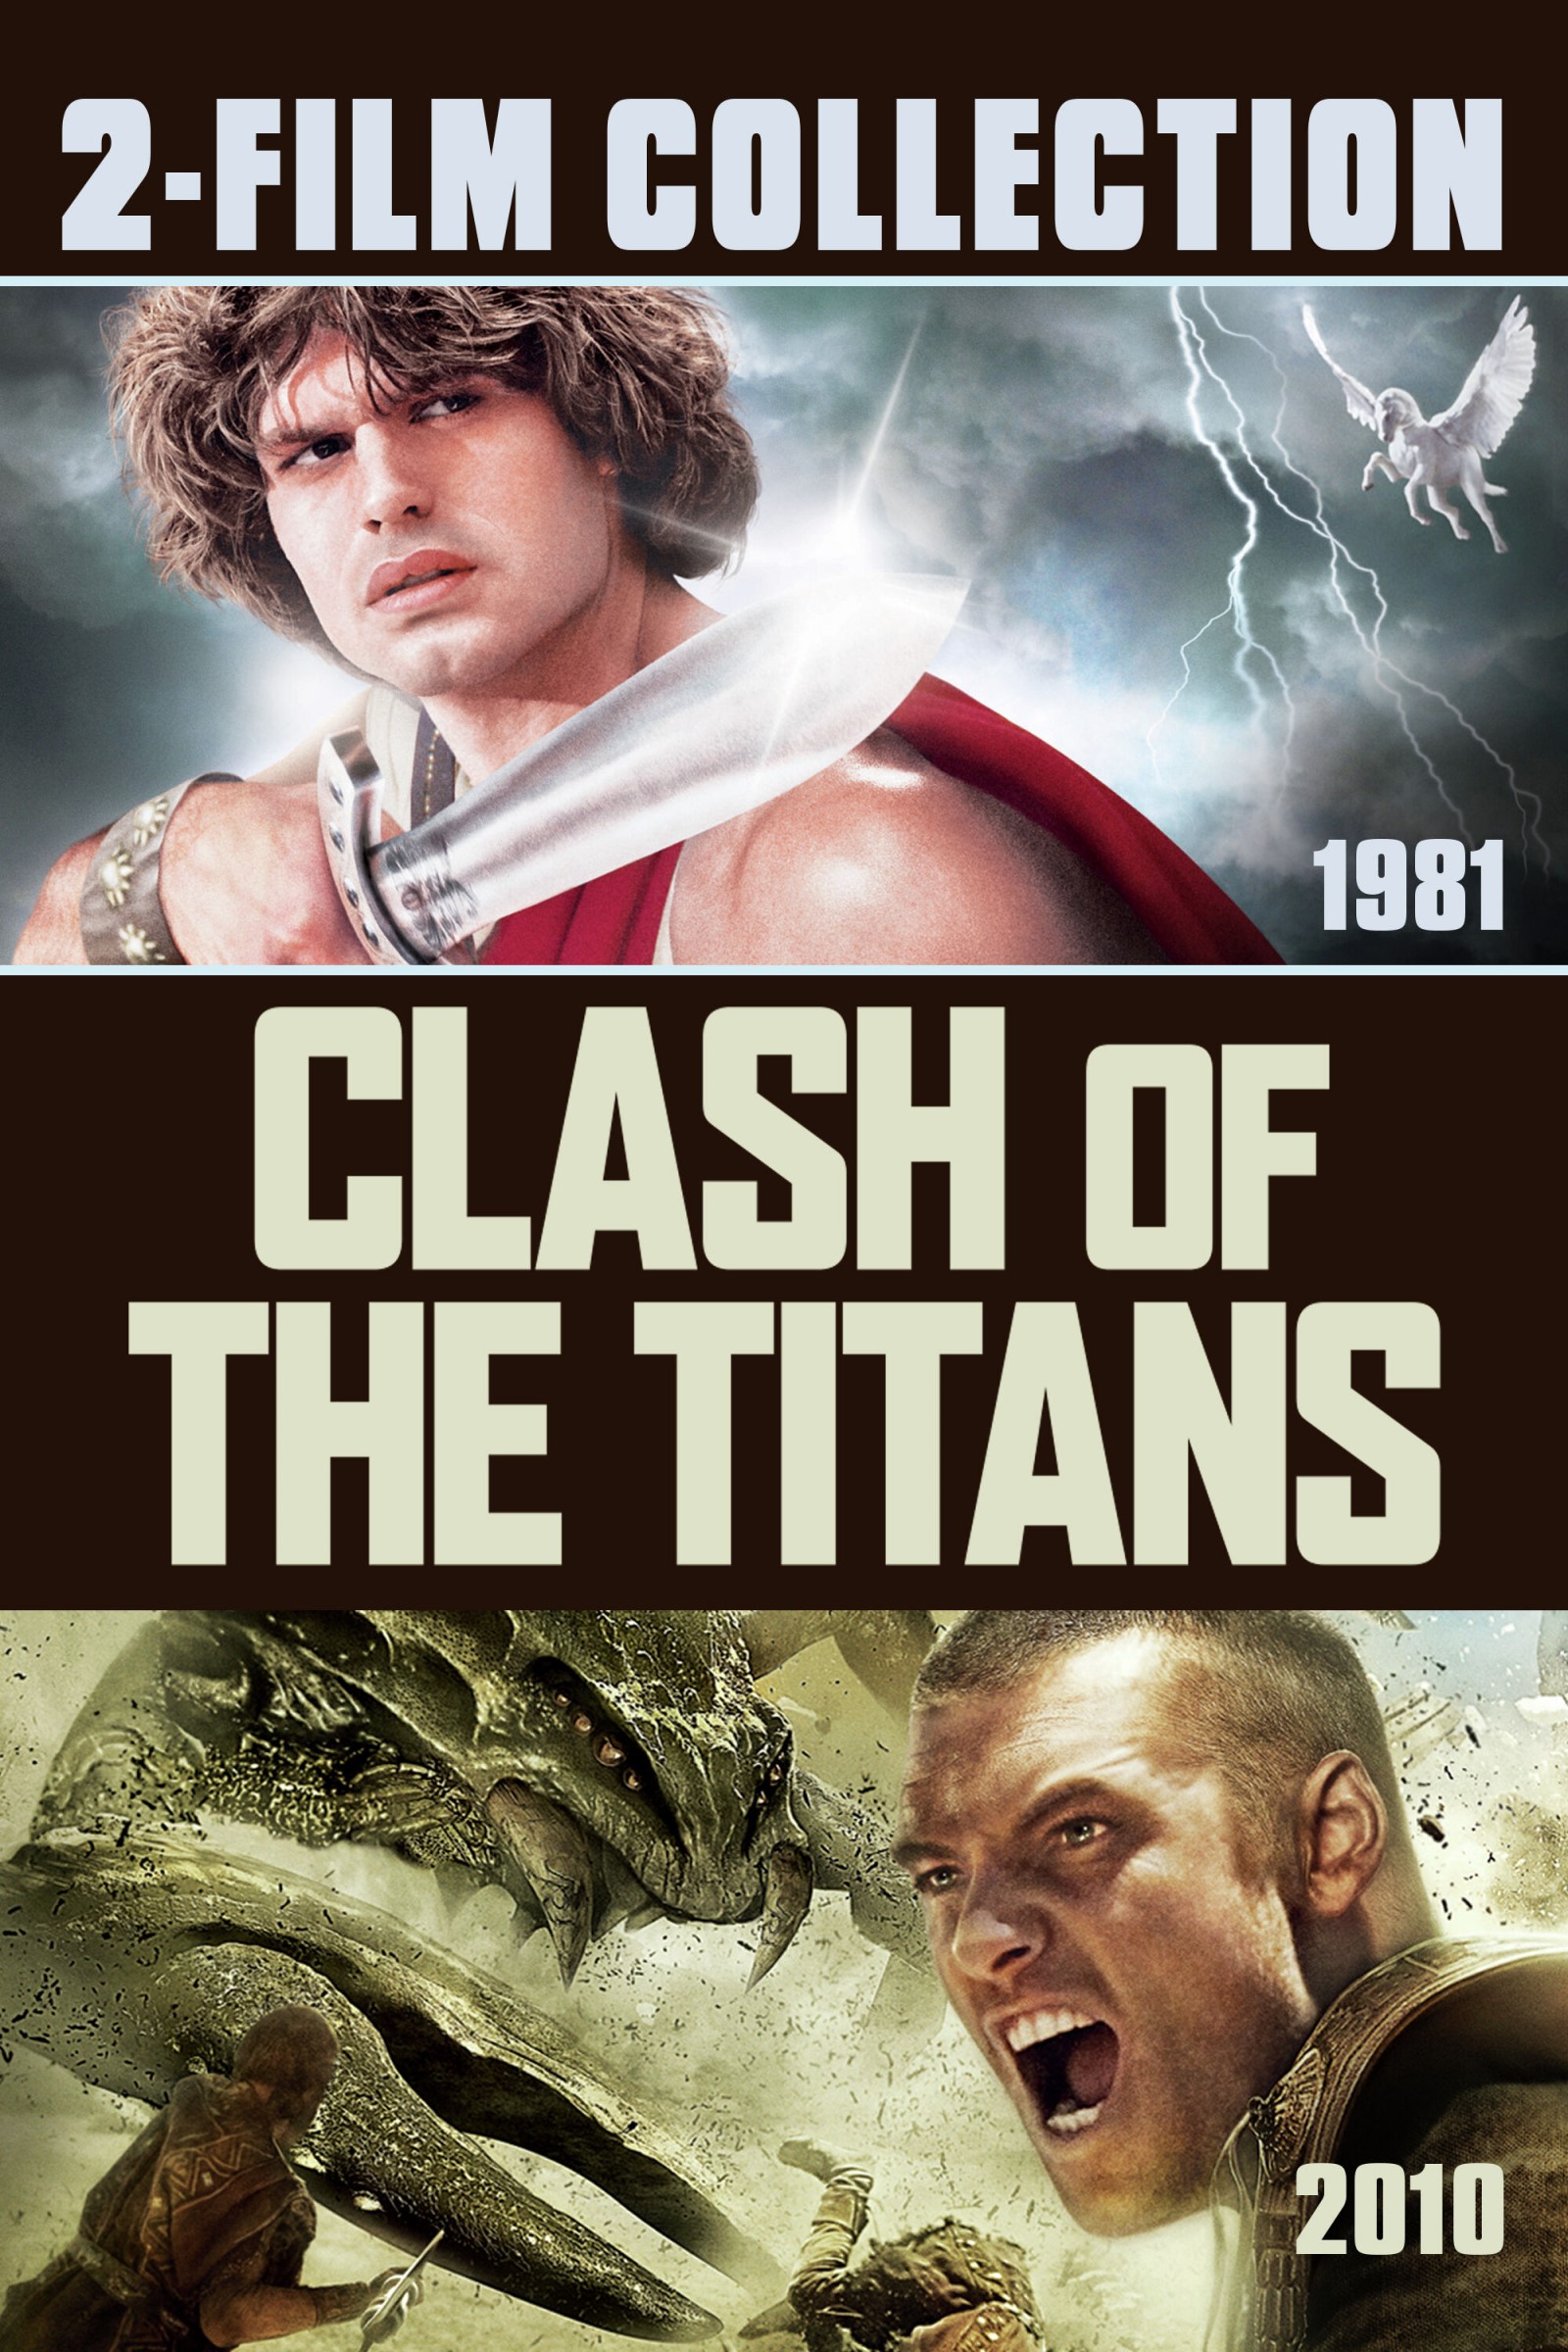 Clash of the Titans (1981) Cast and Crew